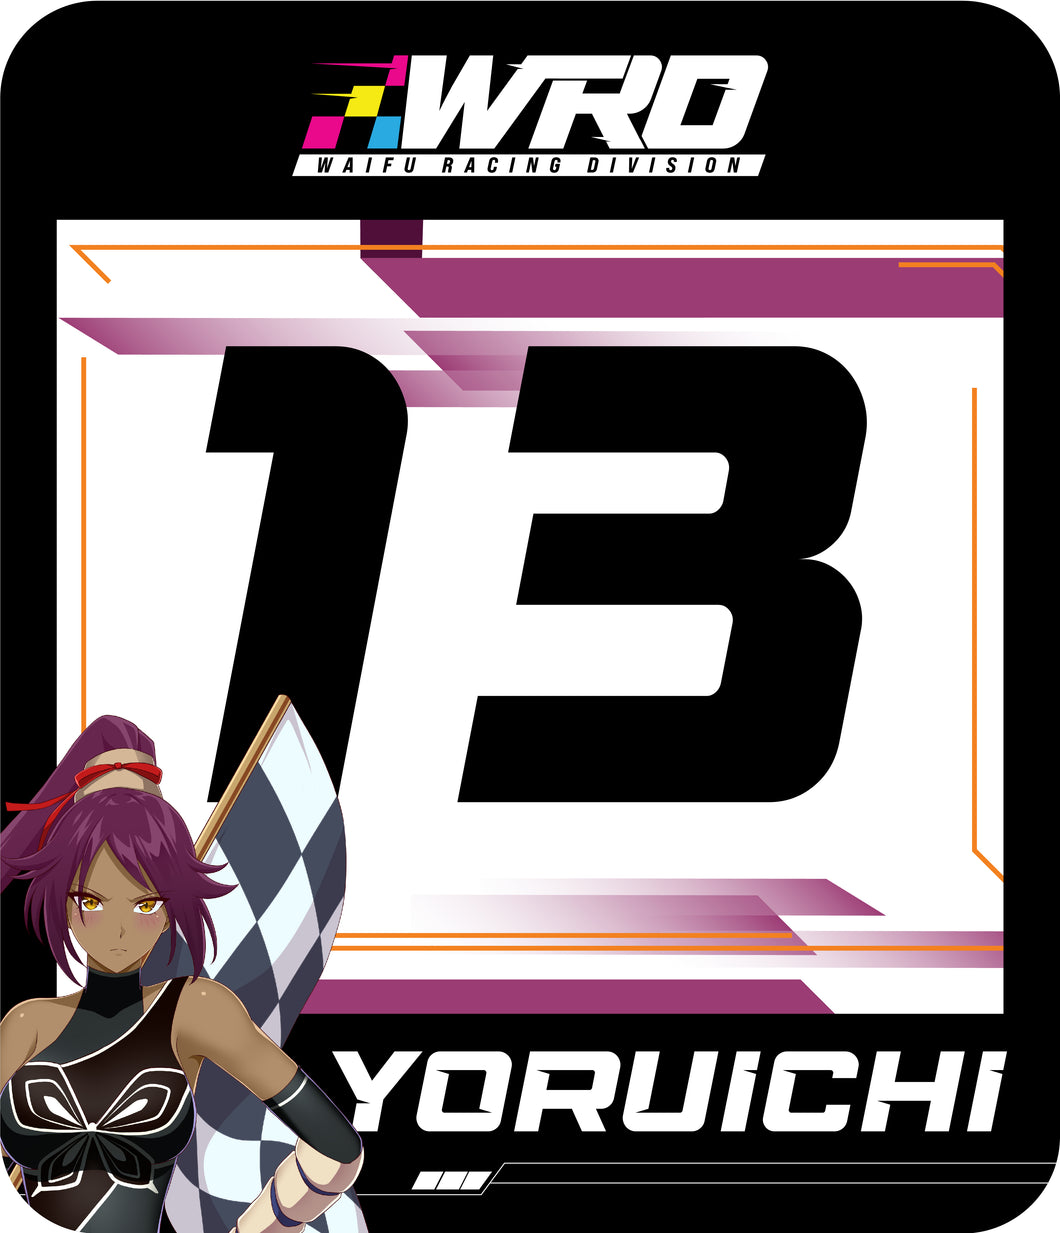 Yoruichi Track Number